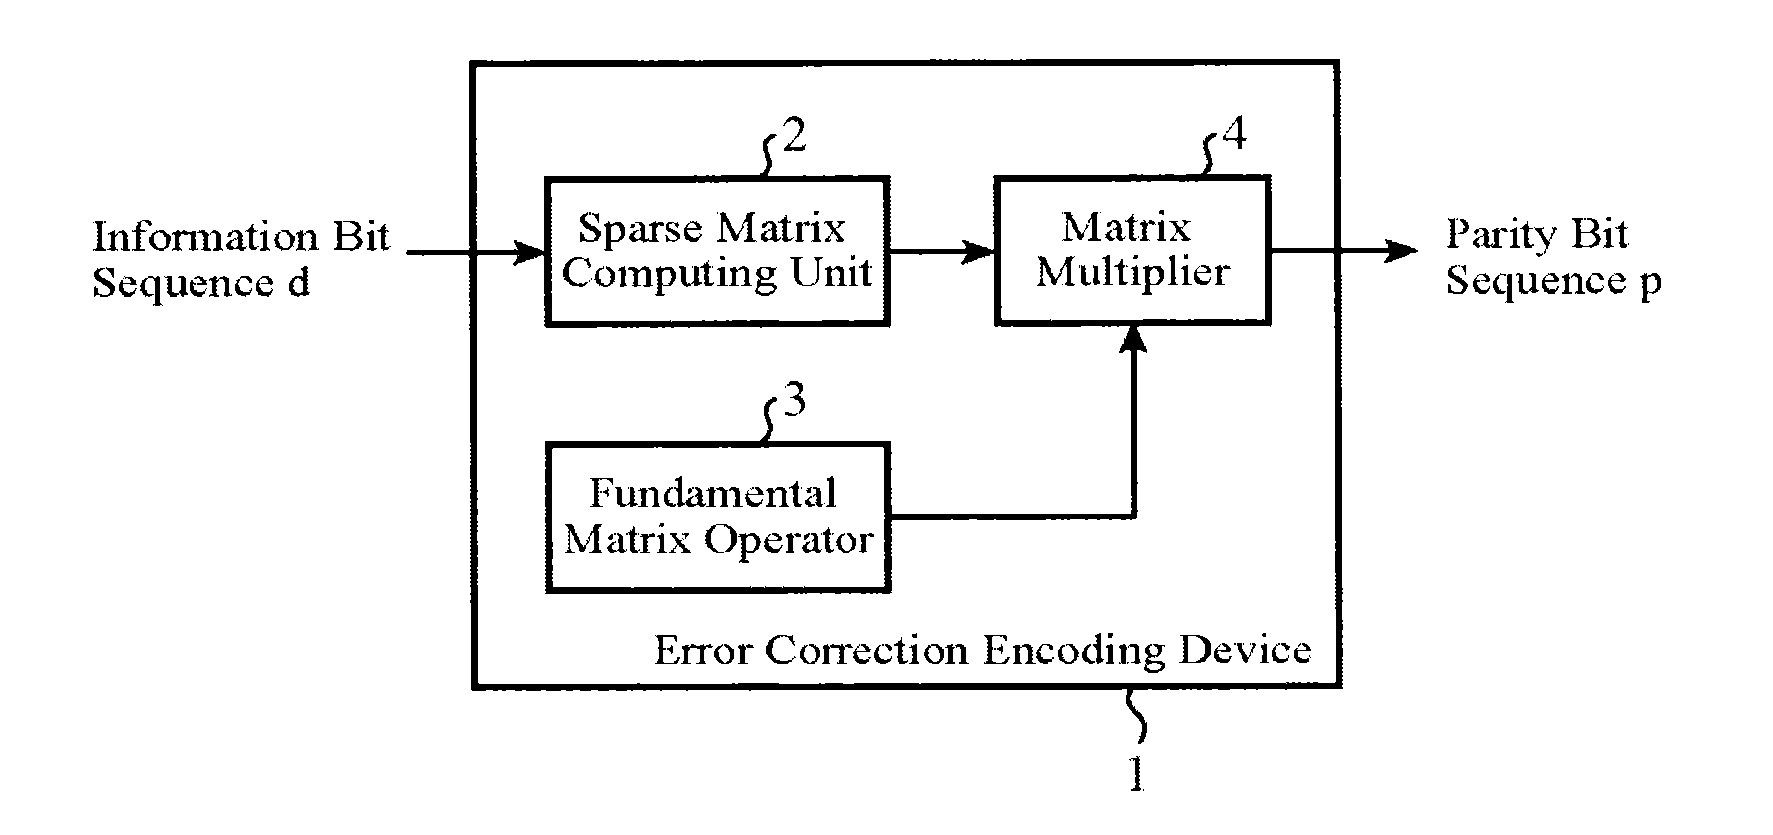 Error correction encoding method and error correction encoding device